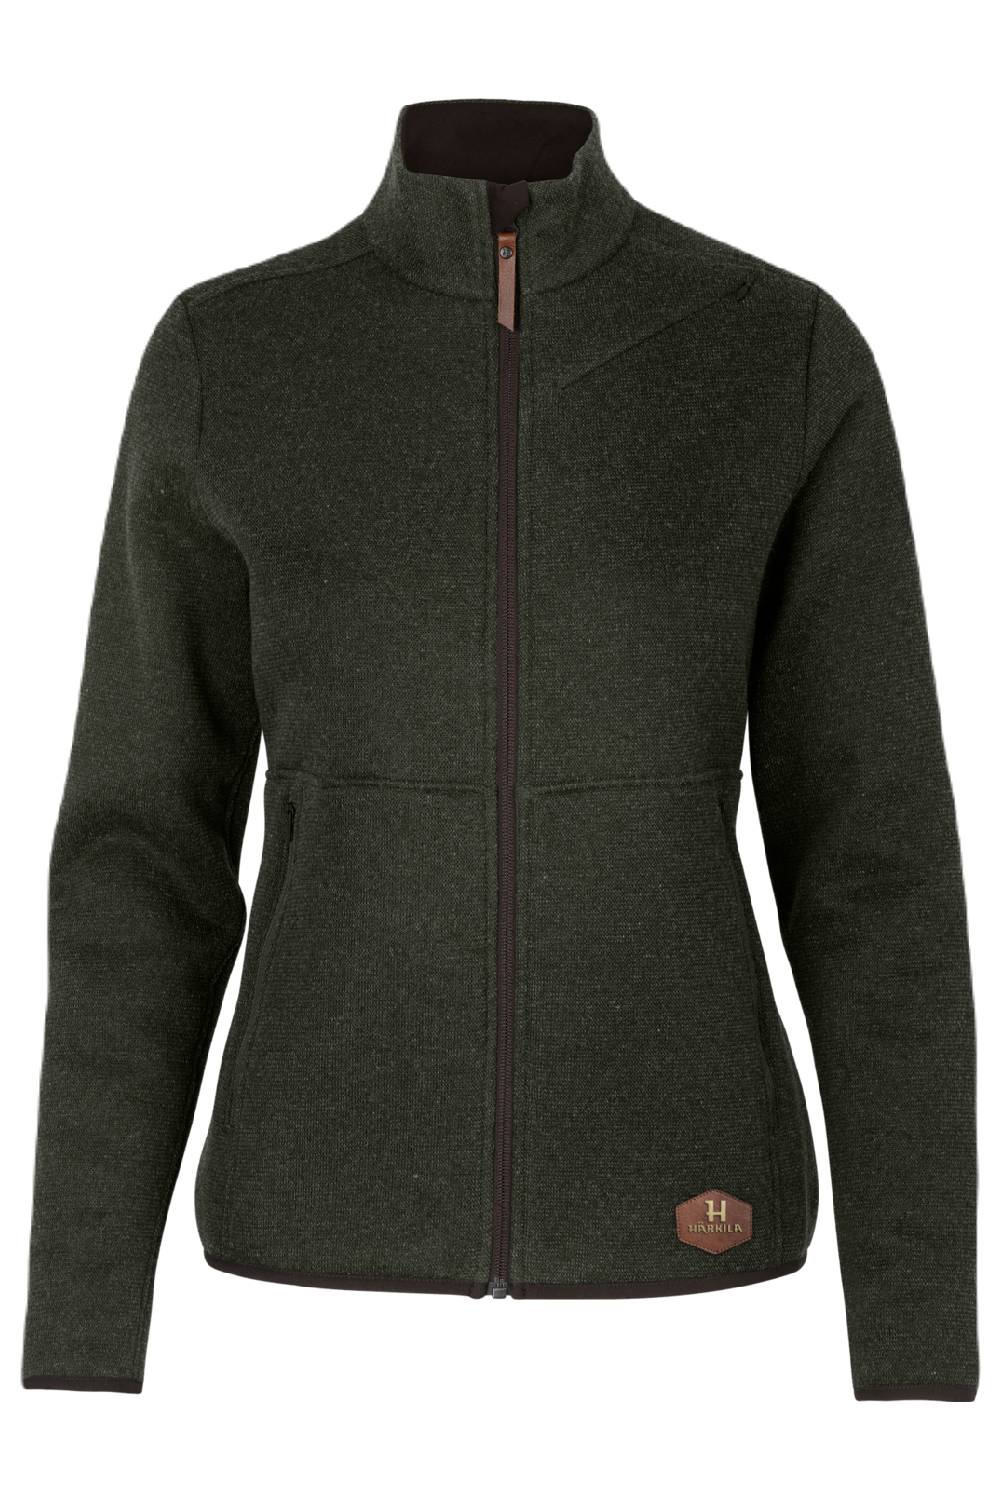 Harkila Womens Metso Full Zip Fleece Jacket in Willow Green 